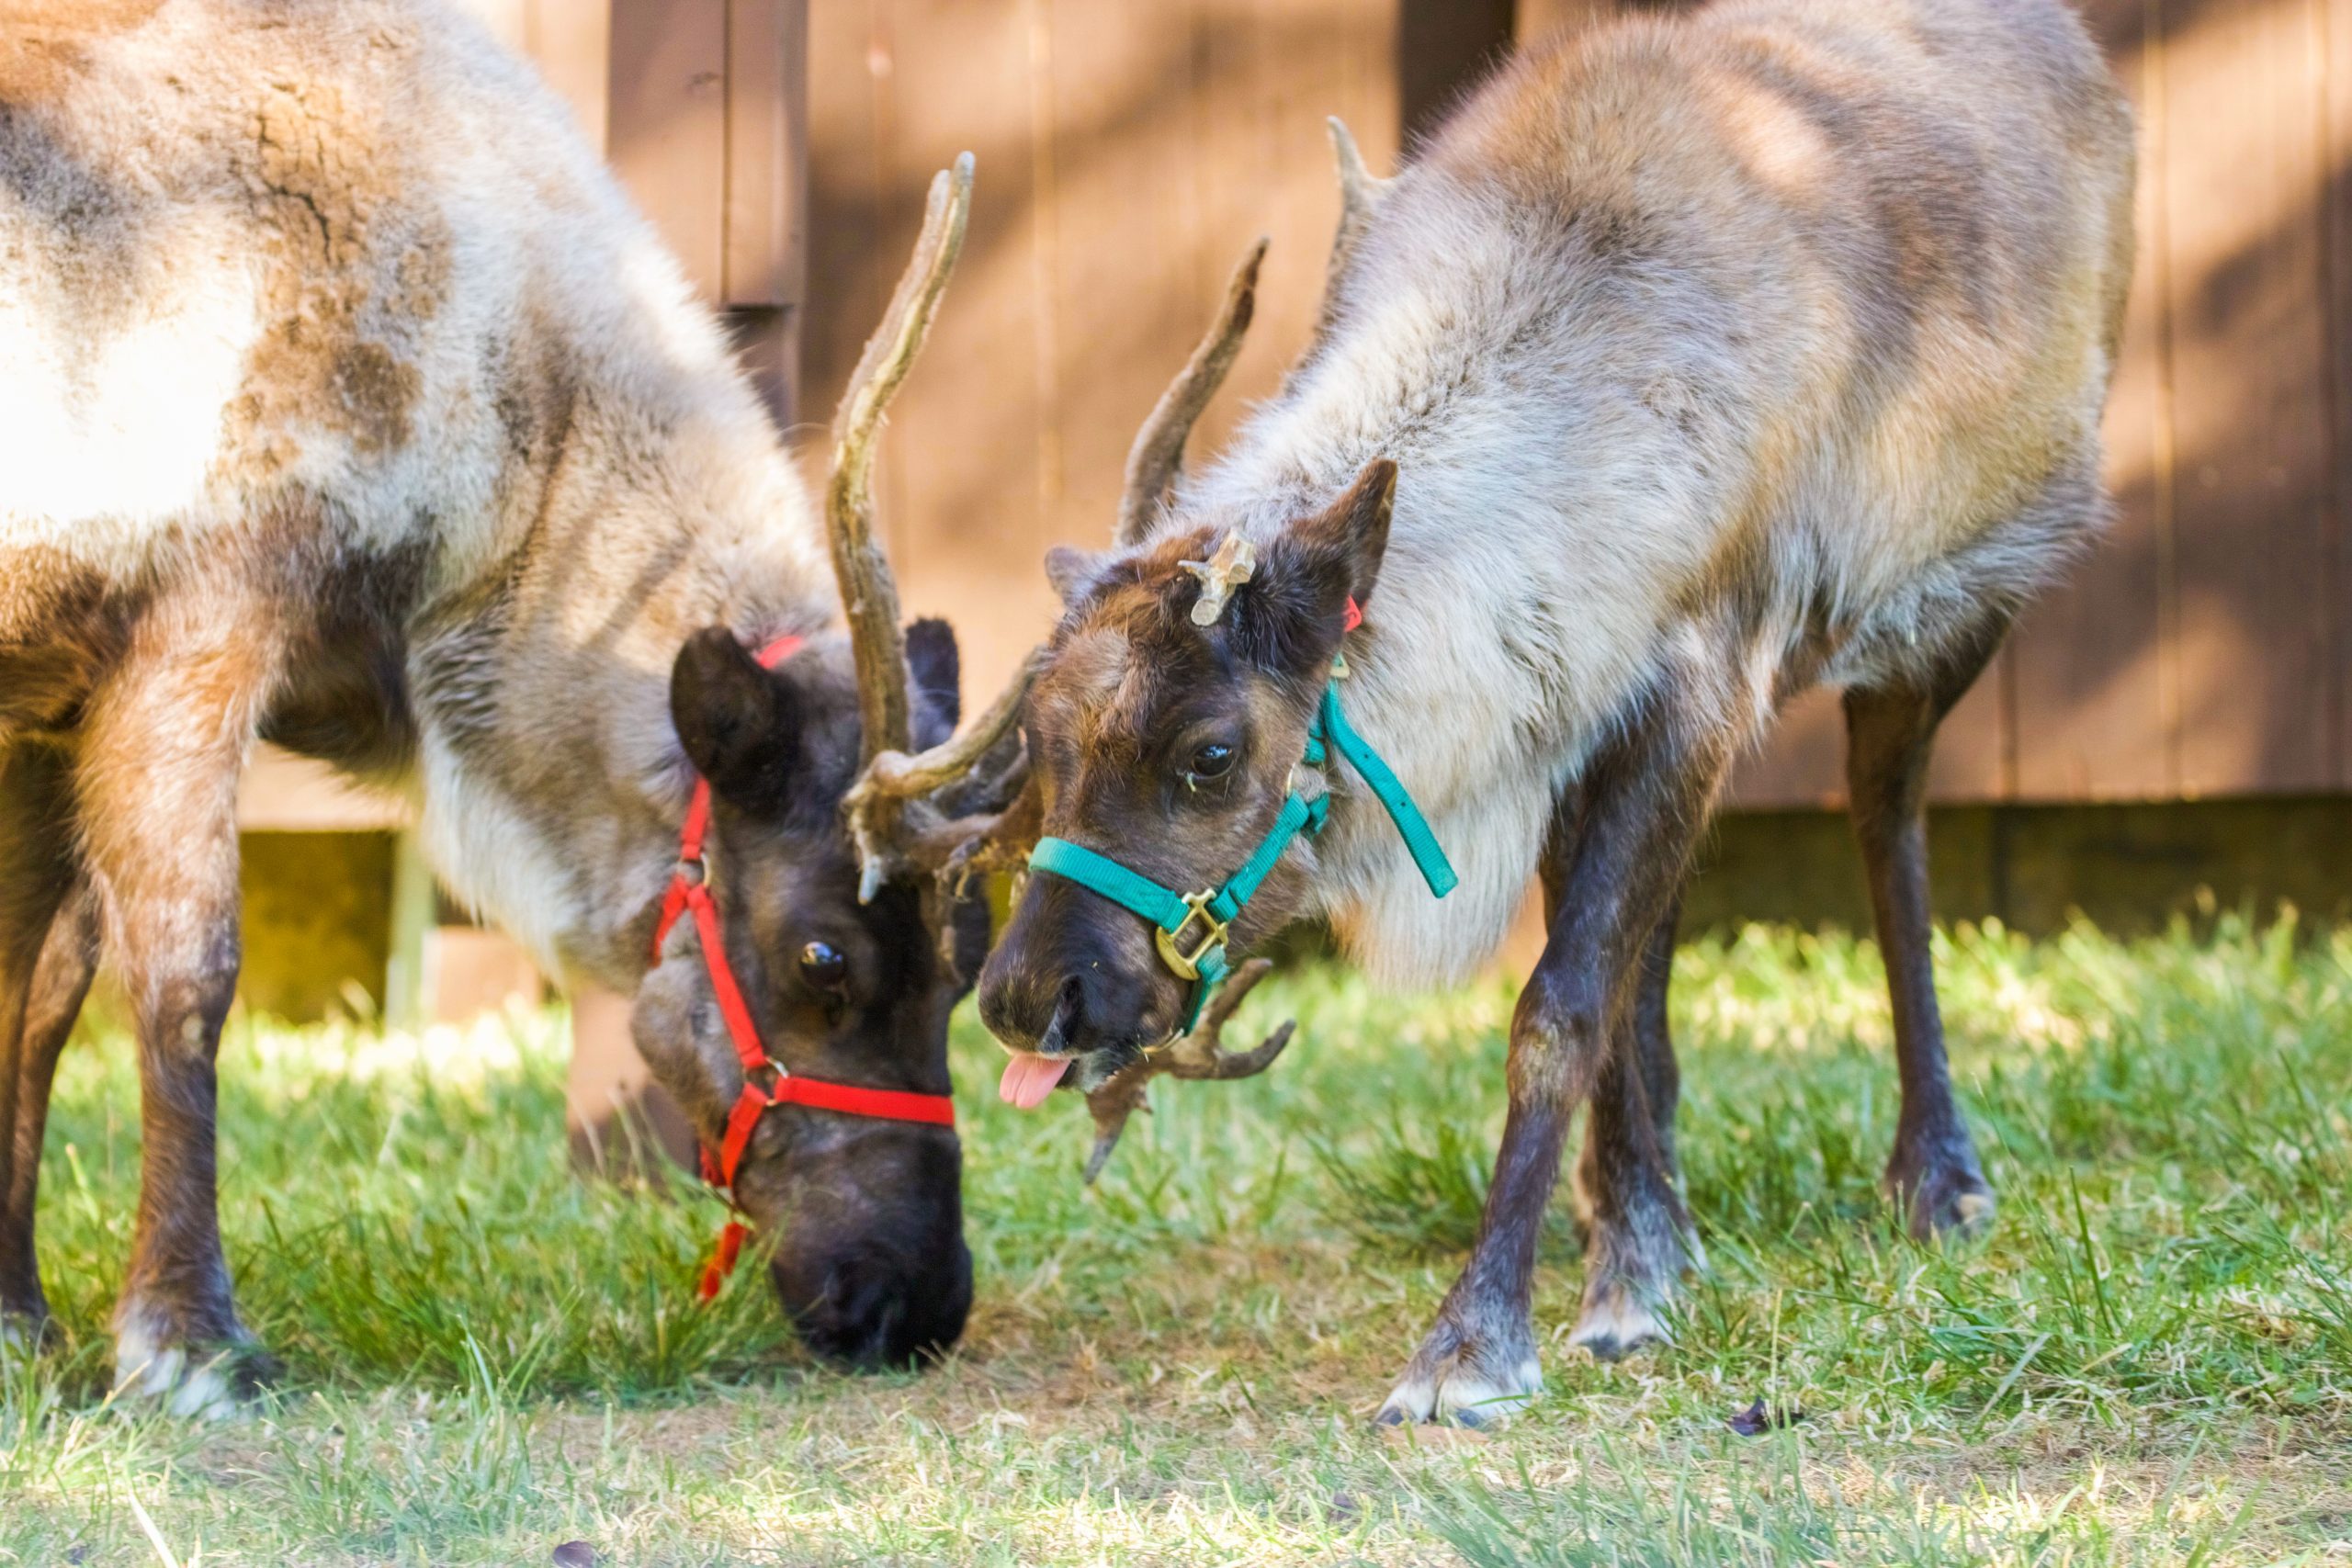 Reindeer visiting SB Zoo through December